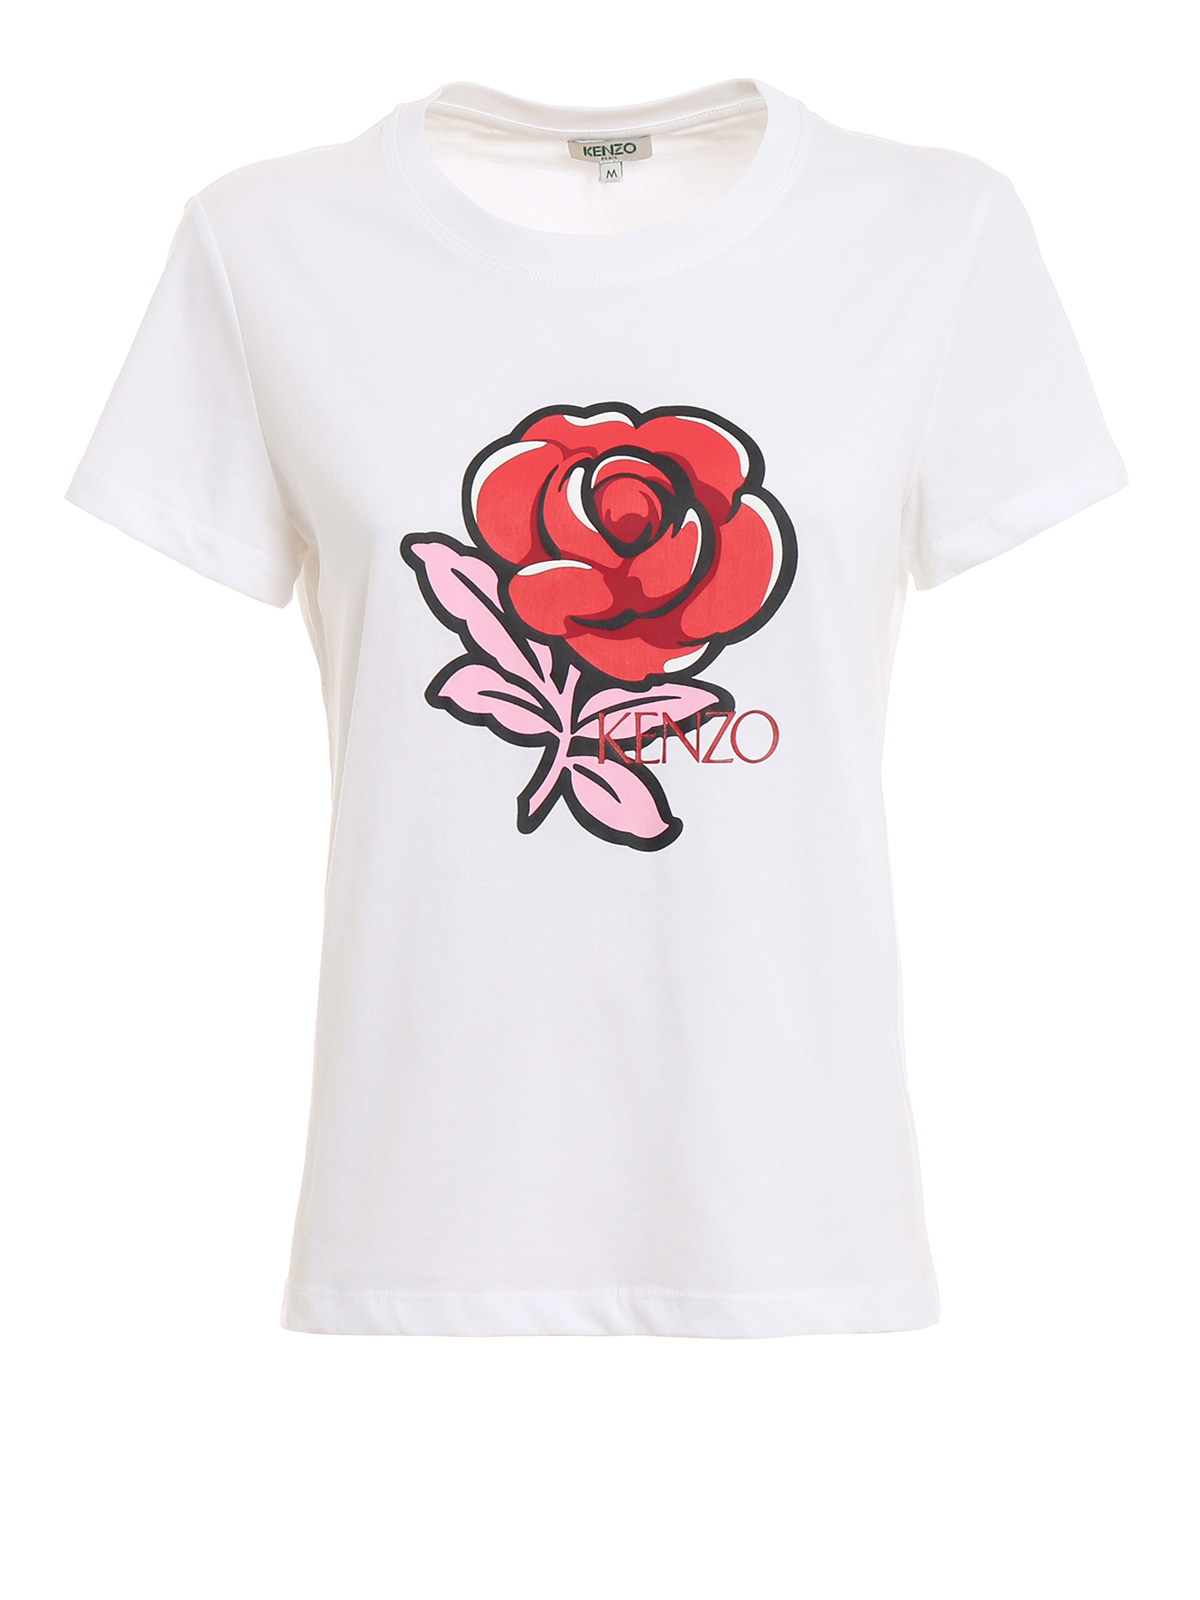 t shirt kenzo rose